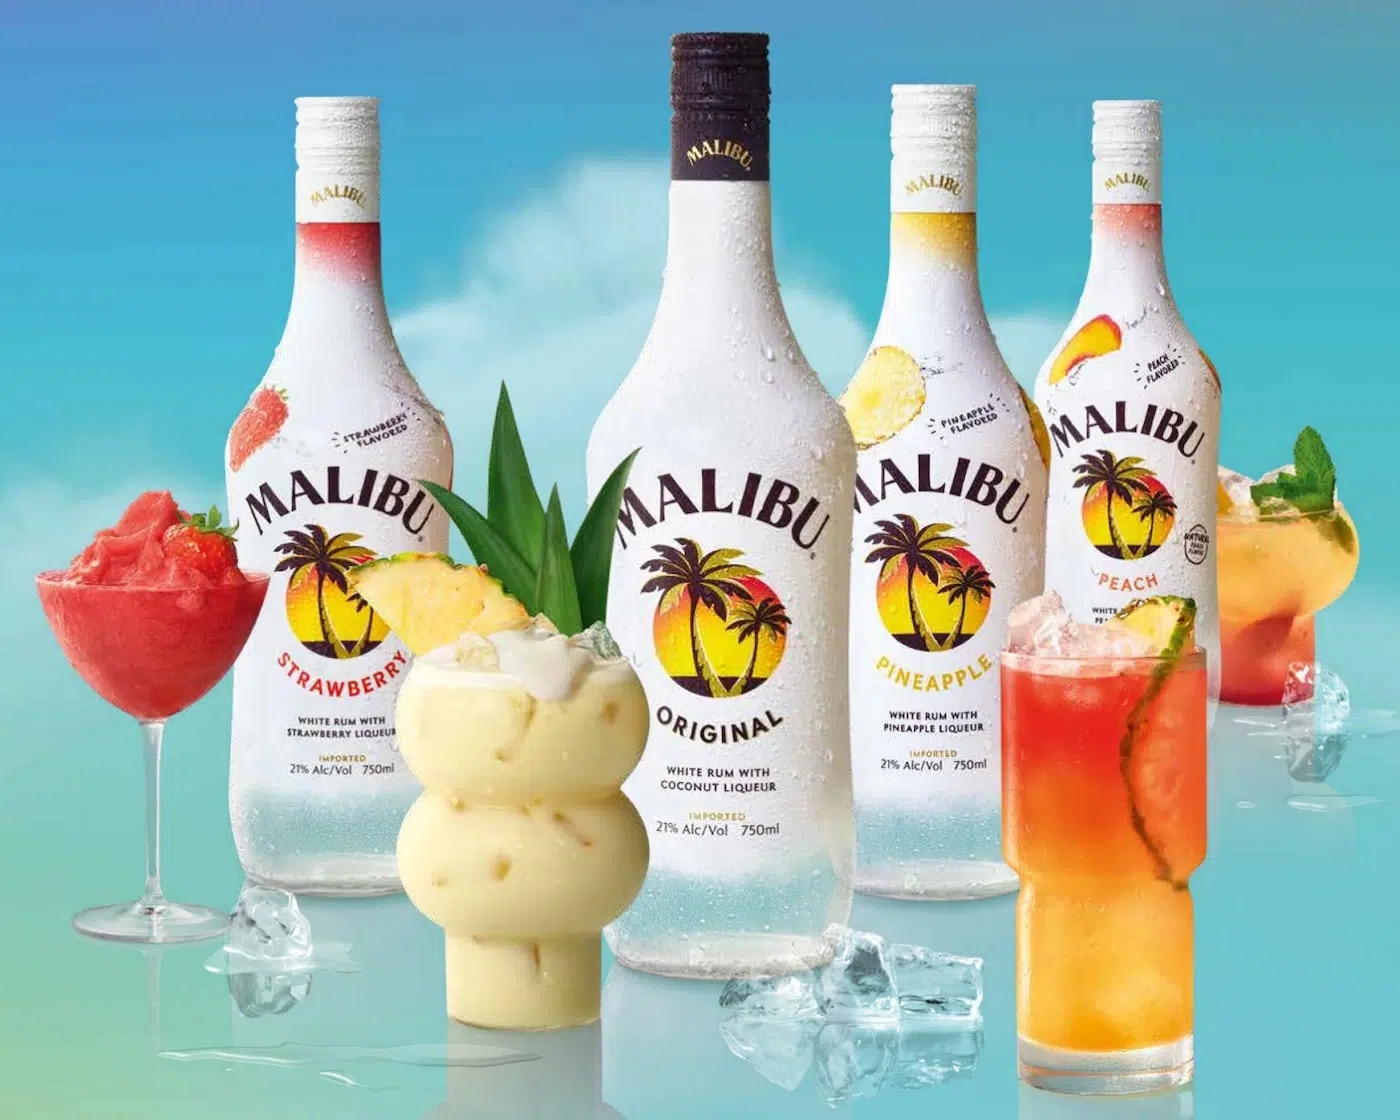 Malibu bottles with drinks